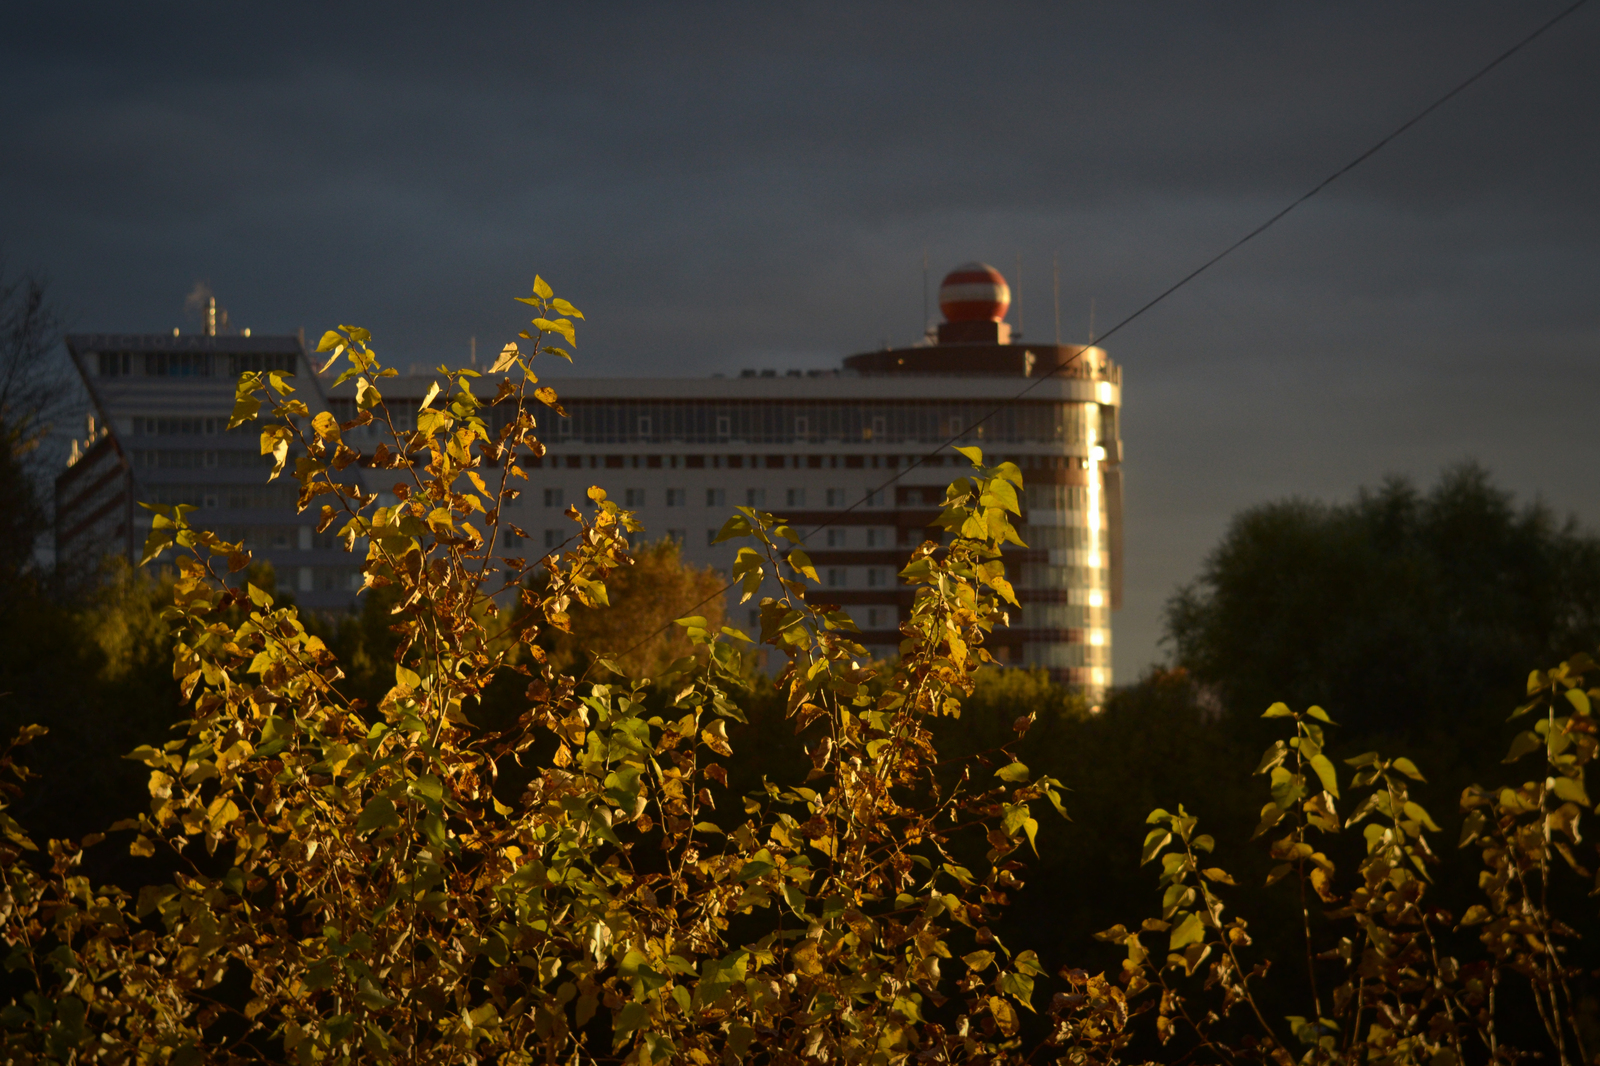 Lead evening - My, Photo, Autumn, Nizhny Novgorod, The clouds